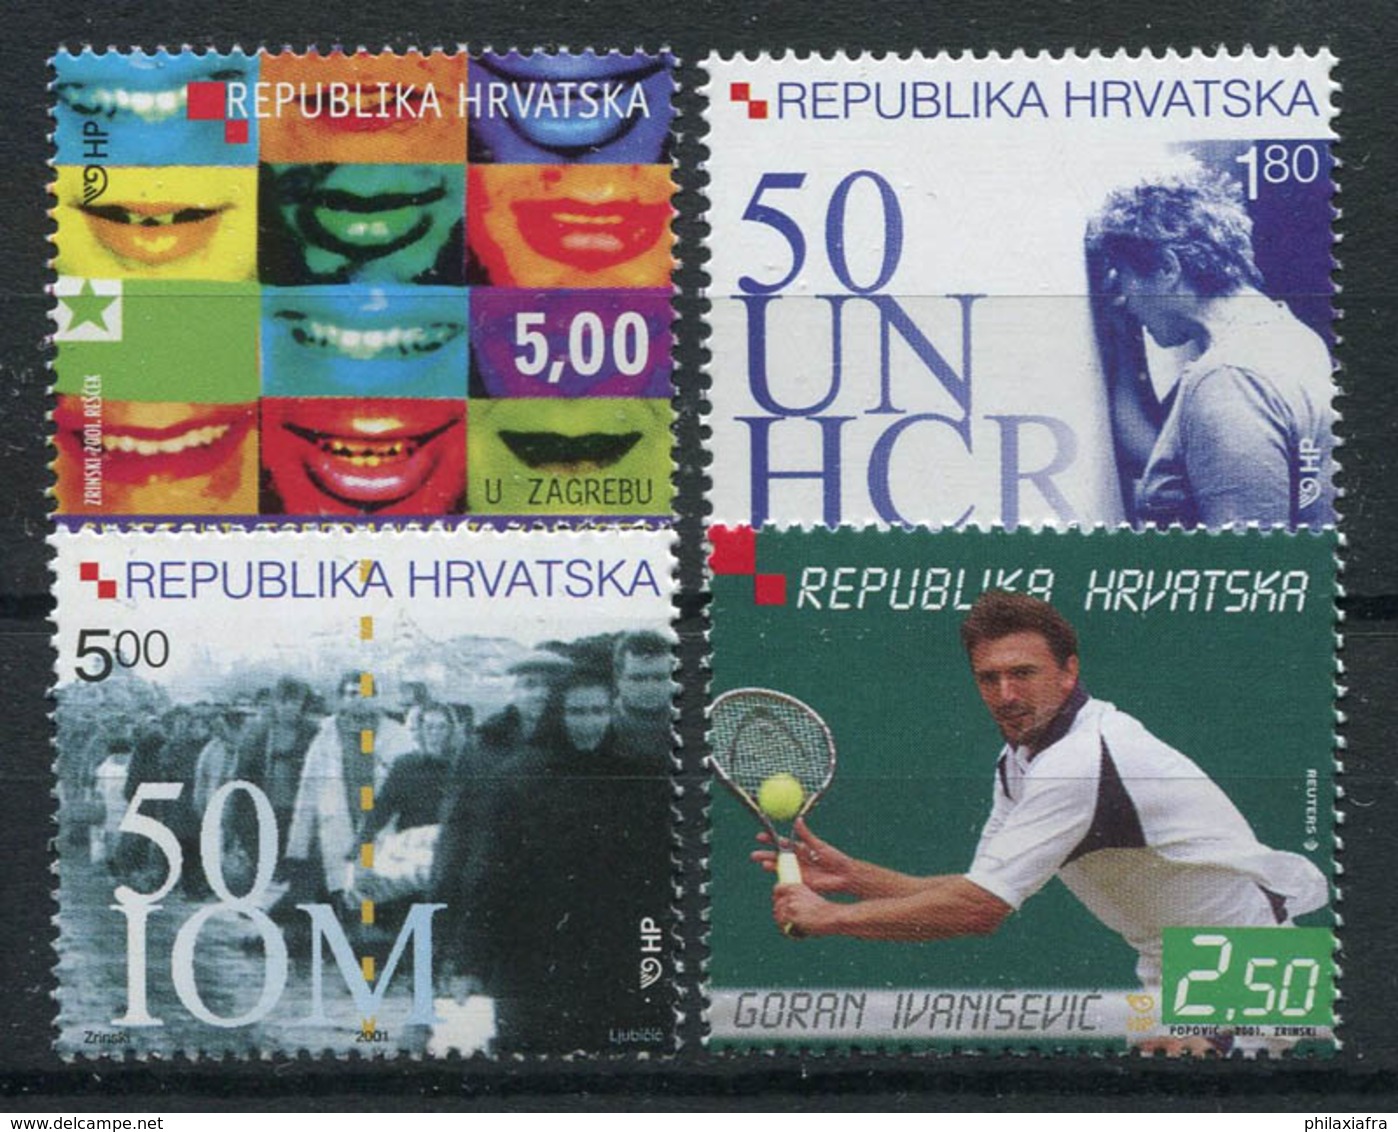 Croatie (Hrvatska) 2001 Mi. 578-581 Neuf ** 100% Espéranto, Tennis, HCR - Croatie